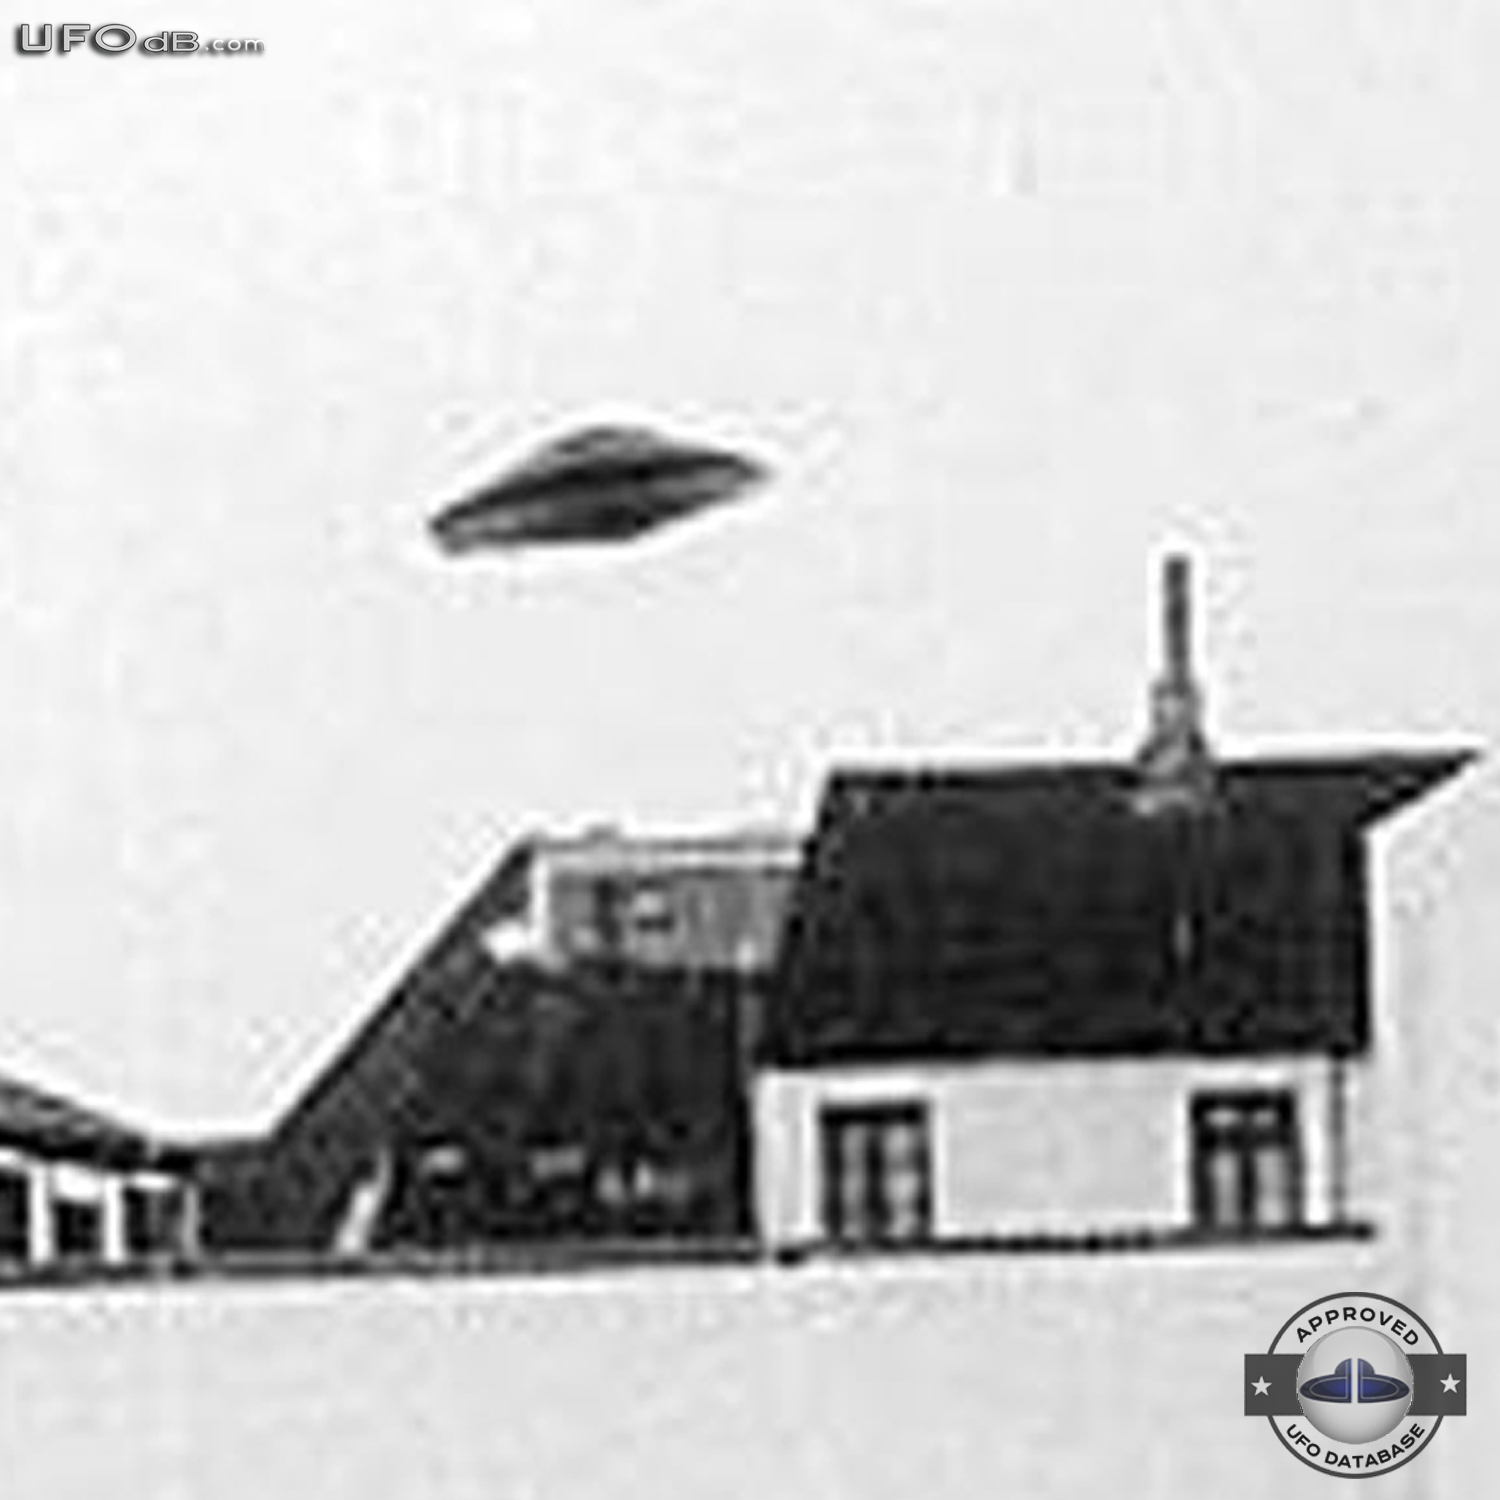 Aarhus Denmark - Rare Classic Saucer Shape UFO picture | November 1971 UFO Picture #320-4